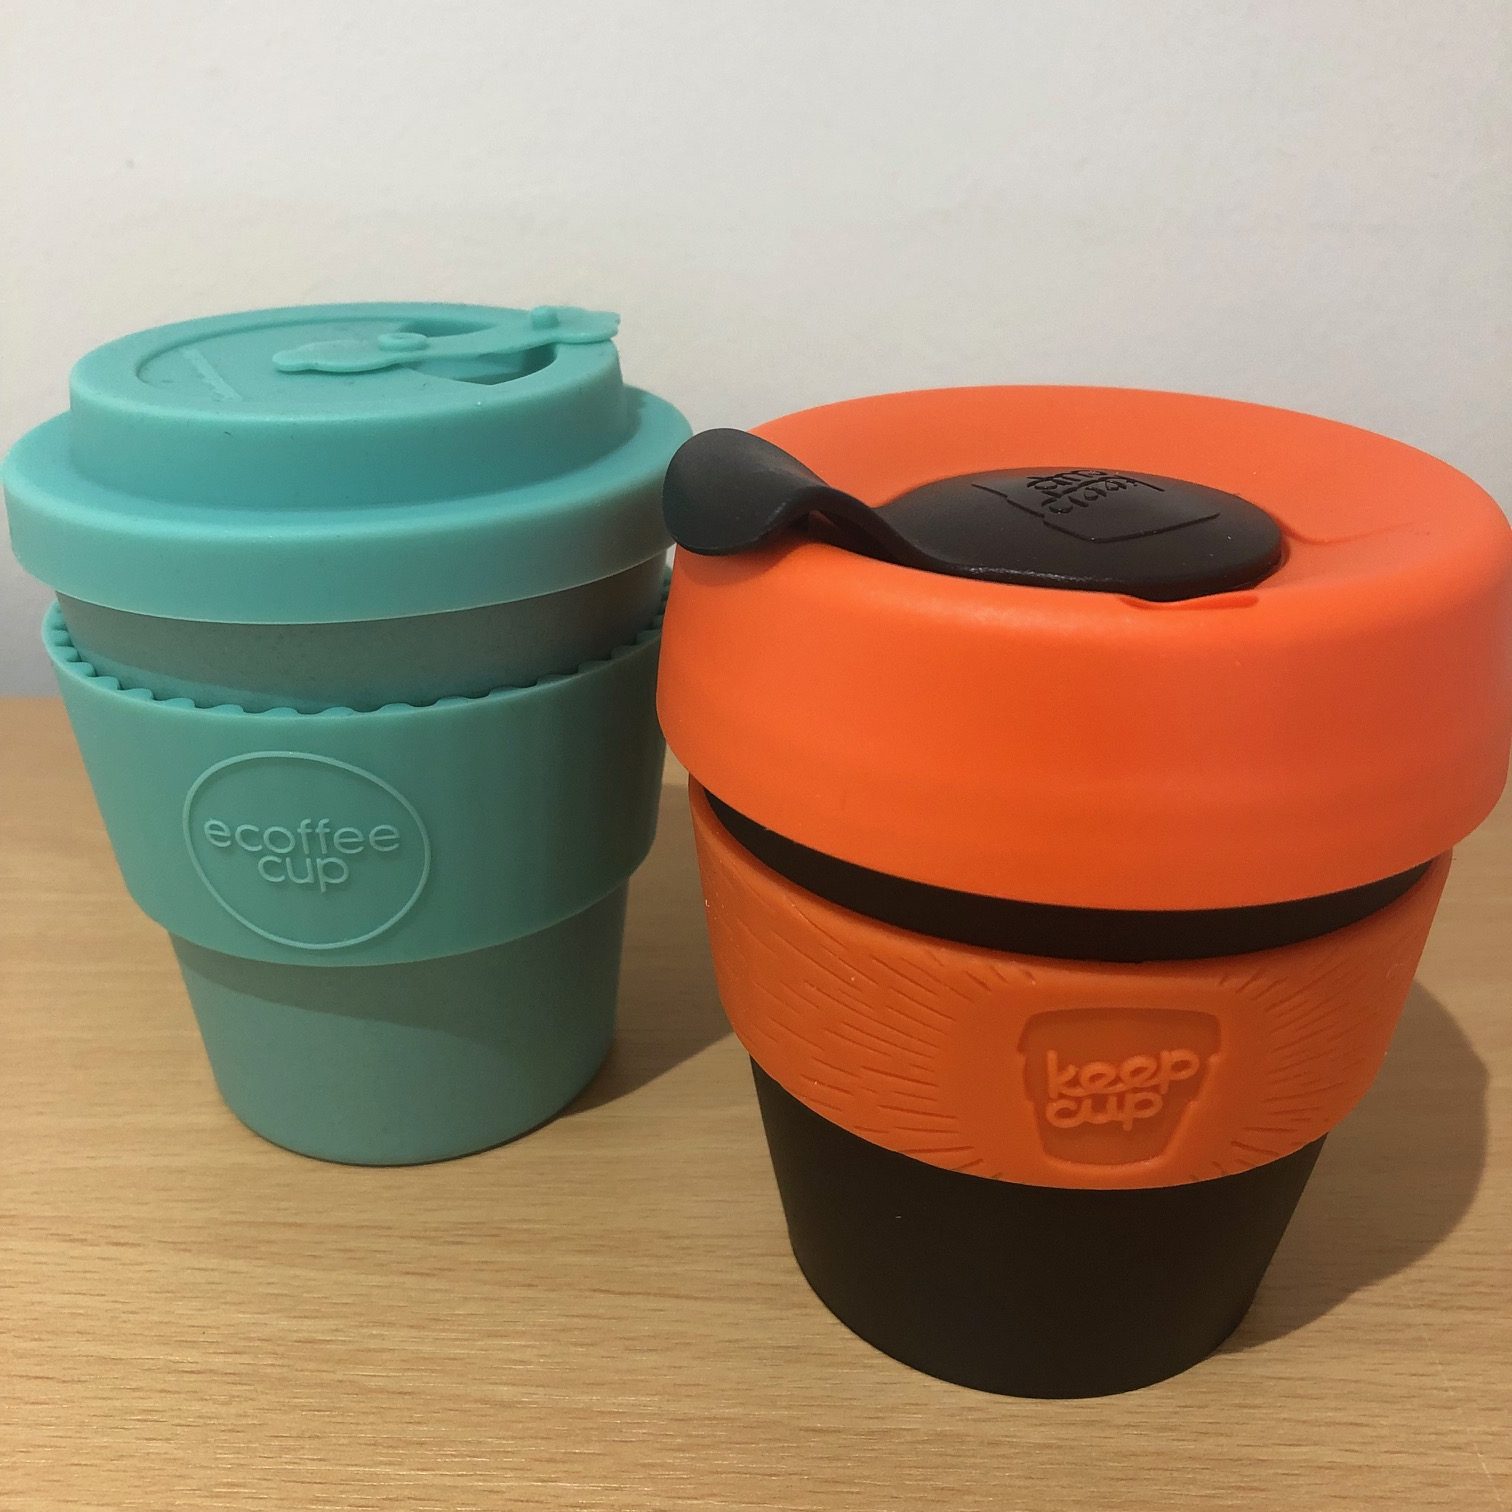 Reusable coffee cups - ecoffee cup